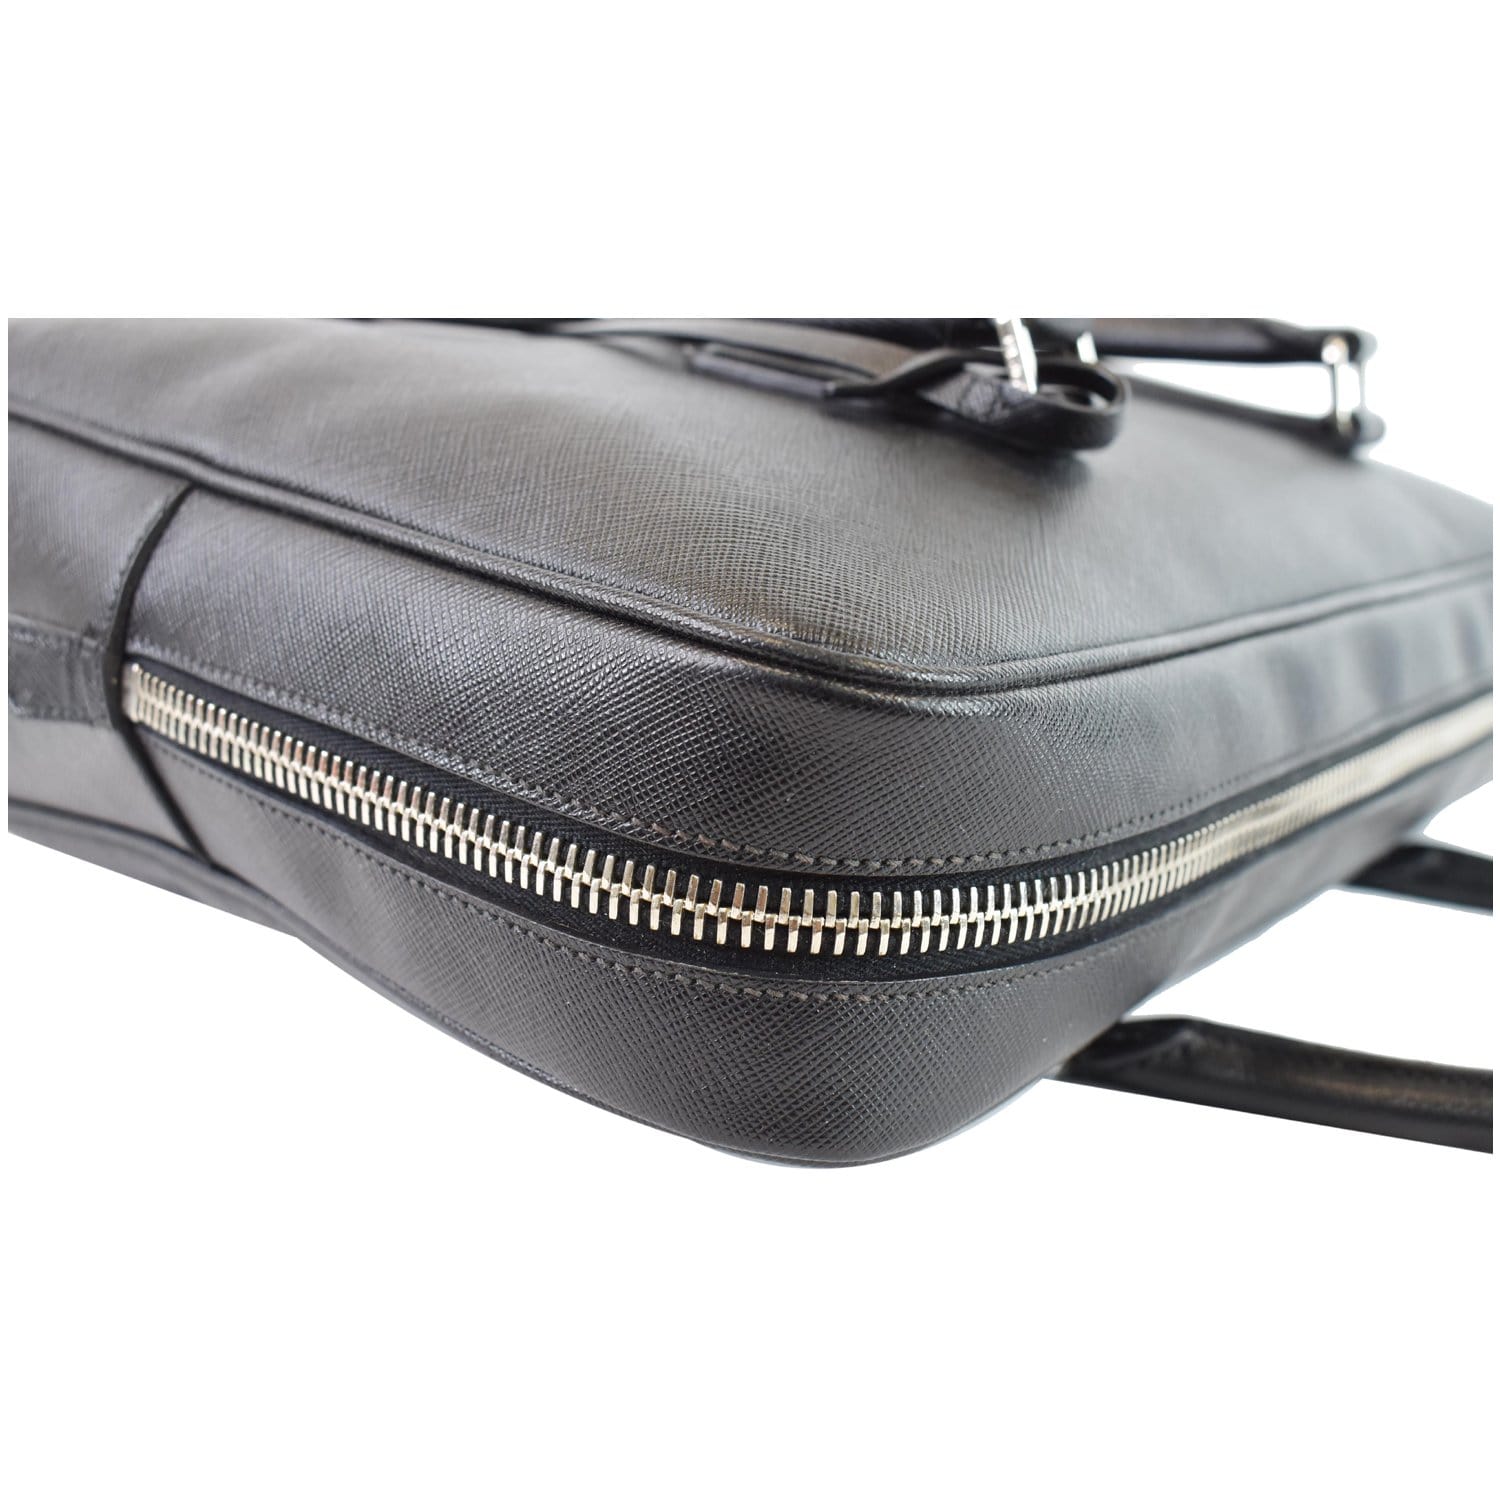 Black Saffiano Leather Travel Bag